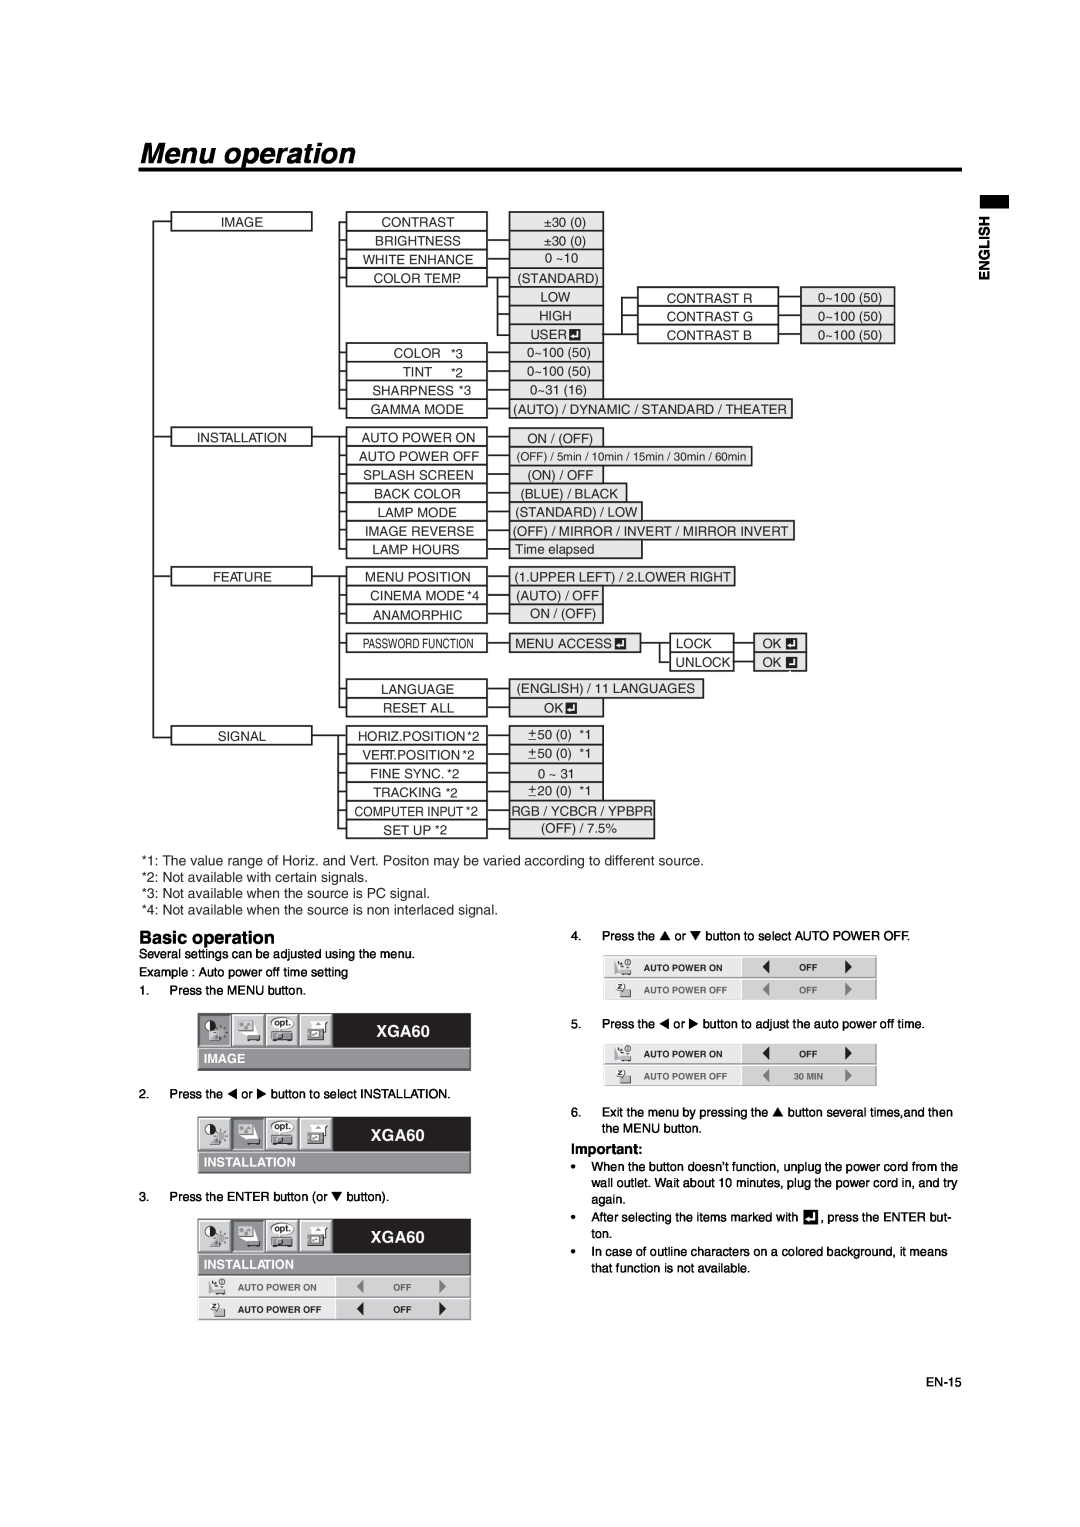 Mitsumi electronic XD206U user manual Menu operation, Basic operation, XGA60, English 